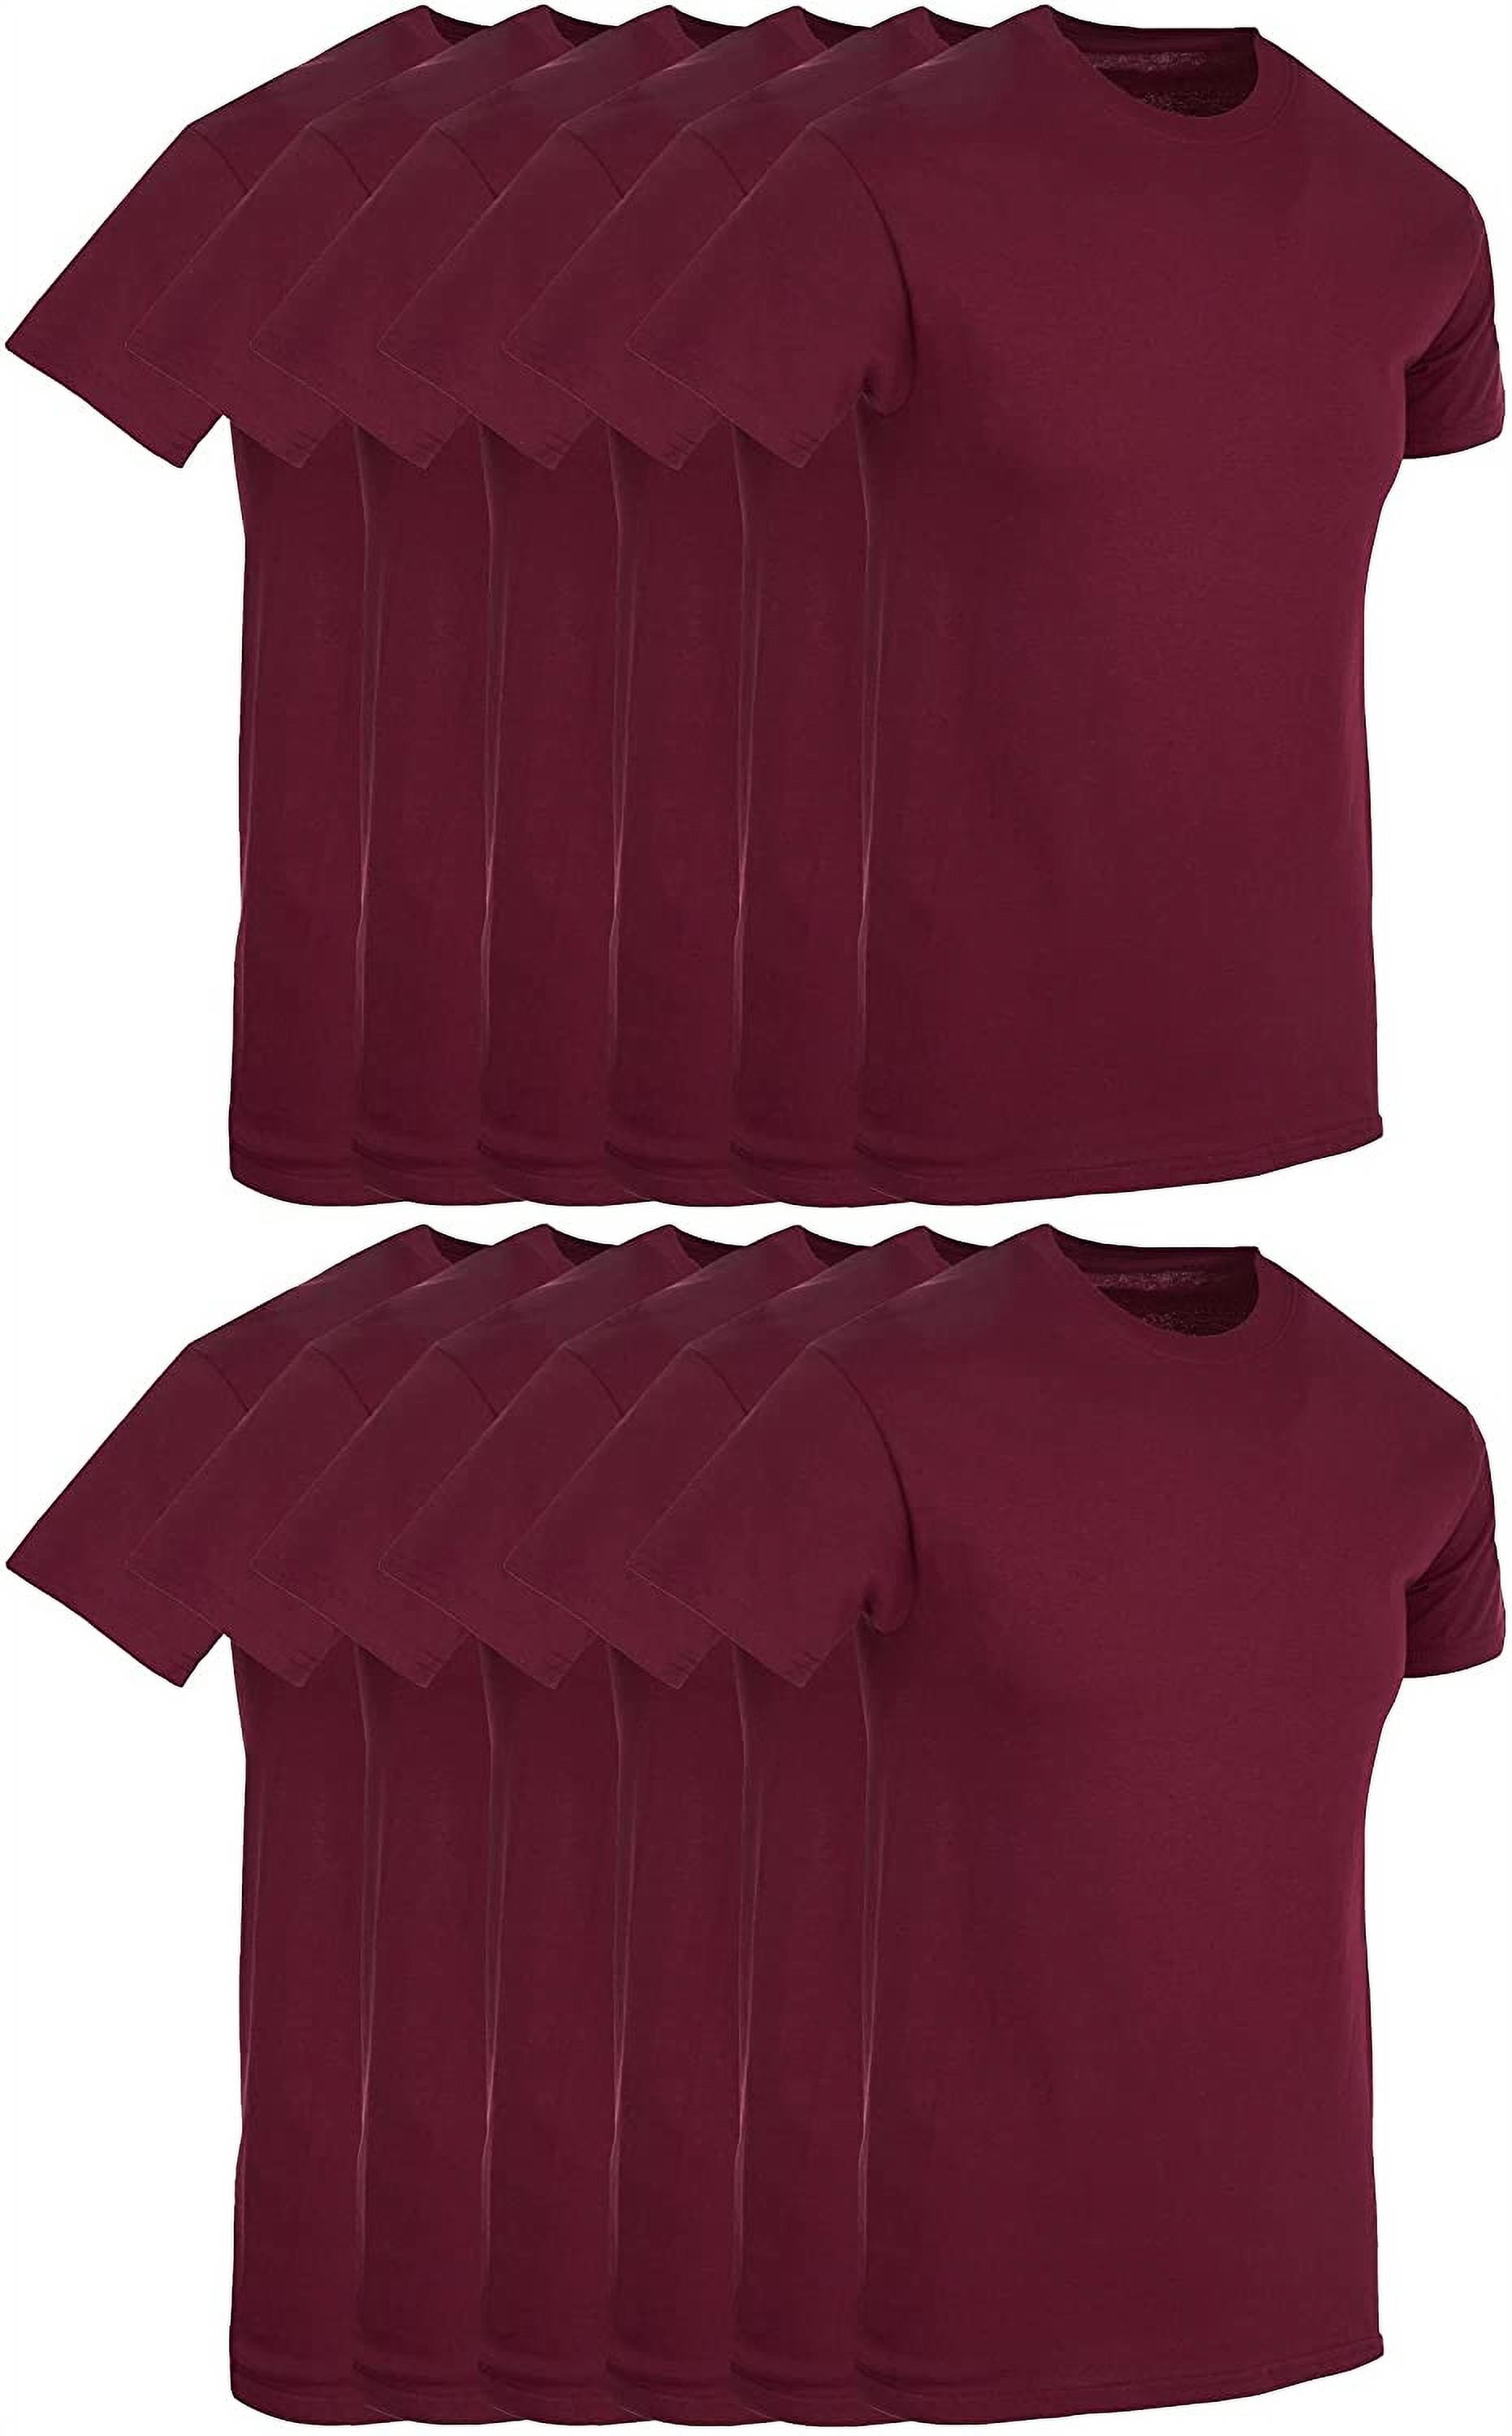 Mens Cotton Short Sleeve Lightweight T-Shirts, Bulk Crew Tees for Solid Bright Colors T-shirt Large, l) - Walmart.com